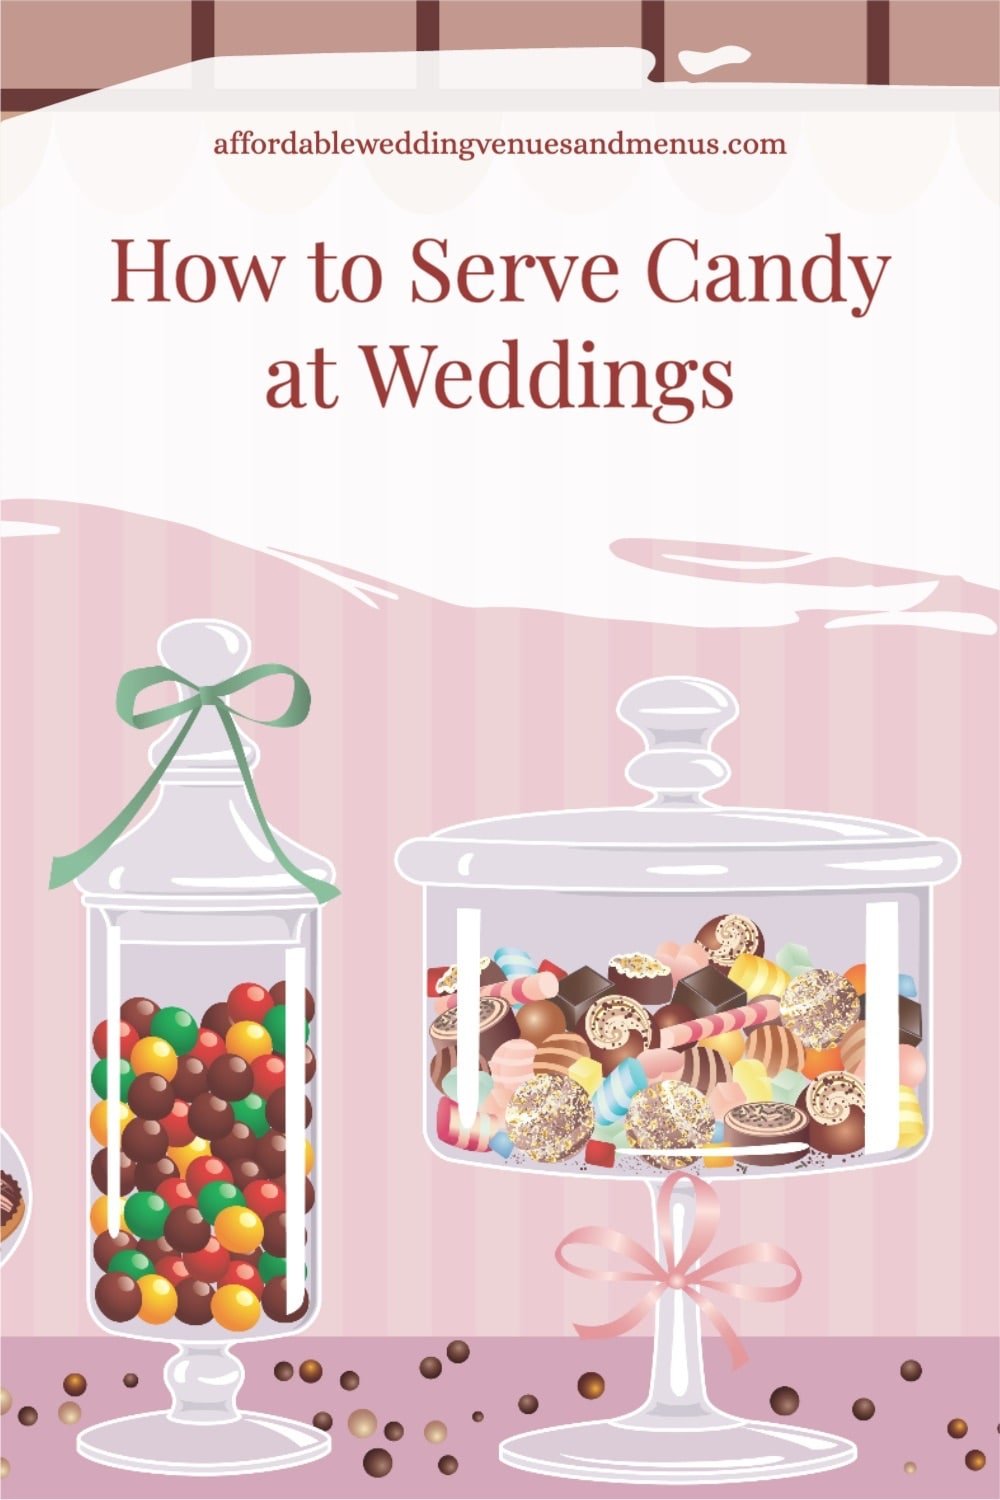 Candy at Weddings: Ideas for a Wedding Candy Bar — Affordable Wedding  Venues & Menus